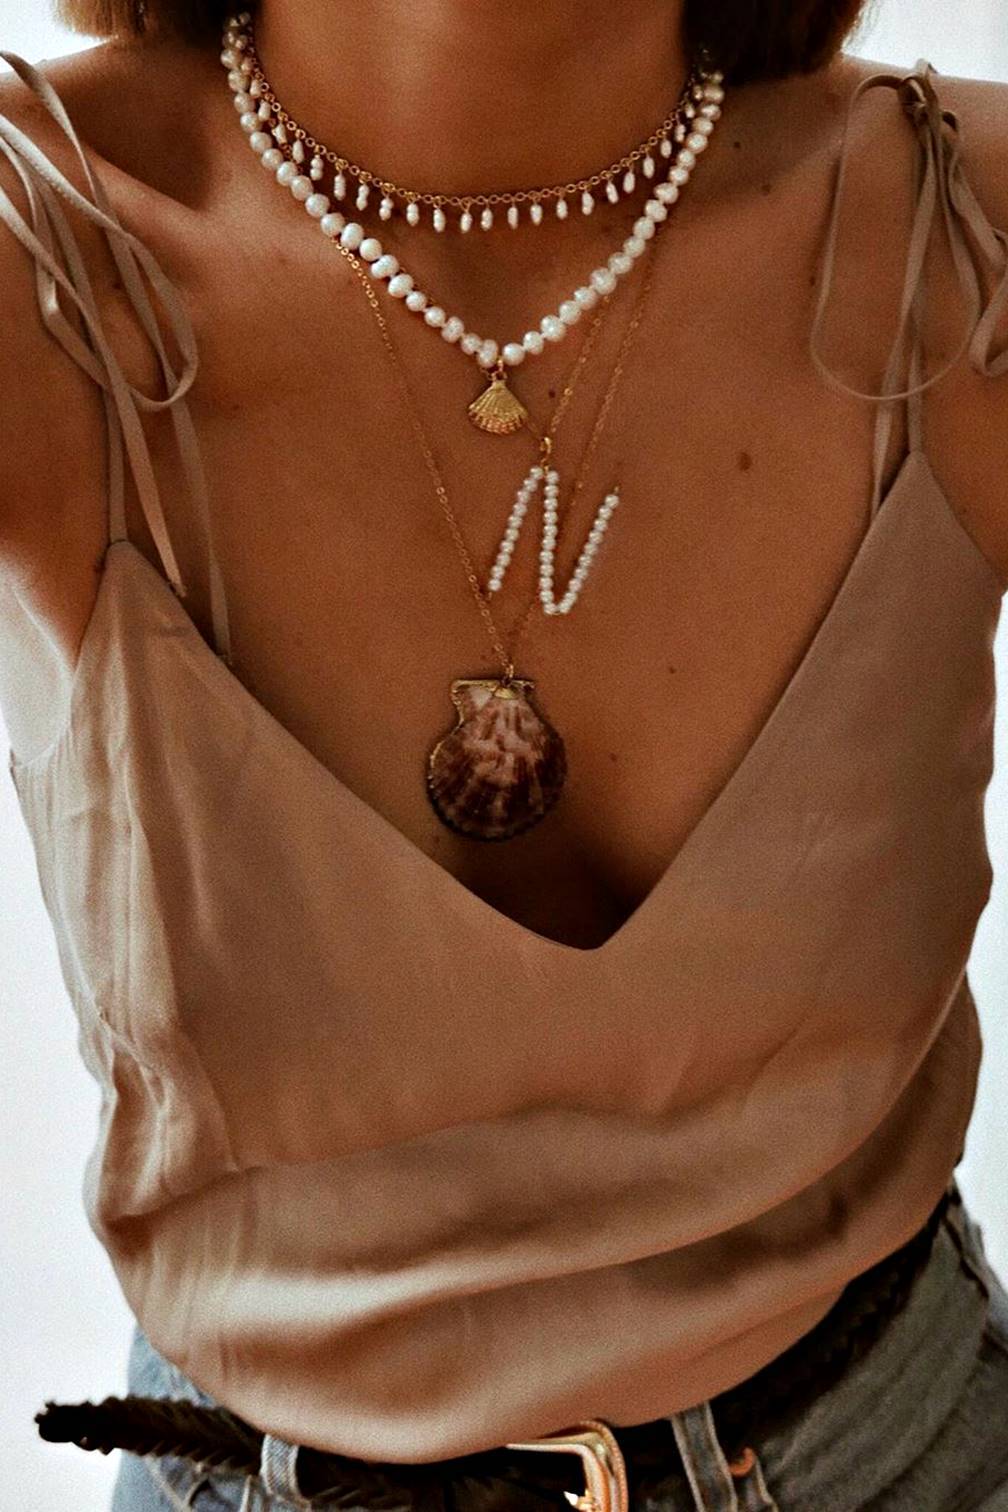 Aurelia Necklace - Boutique Minimaliste has waterproof, durable, elegant and vintage inspired jewelry